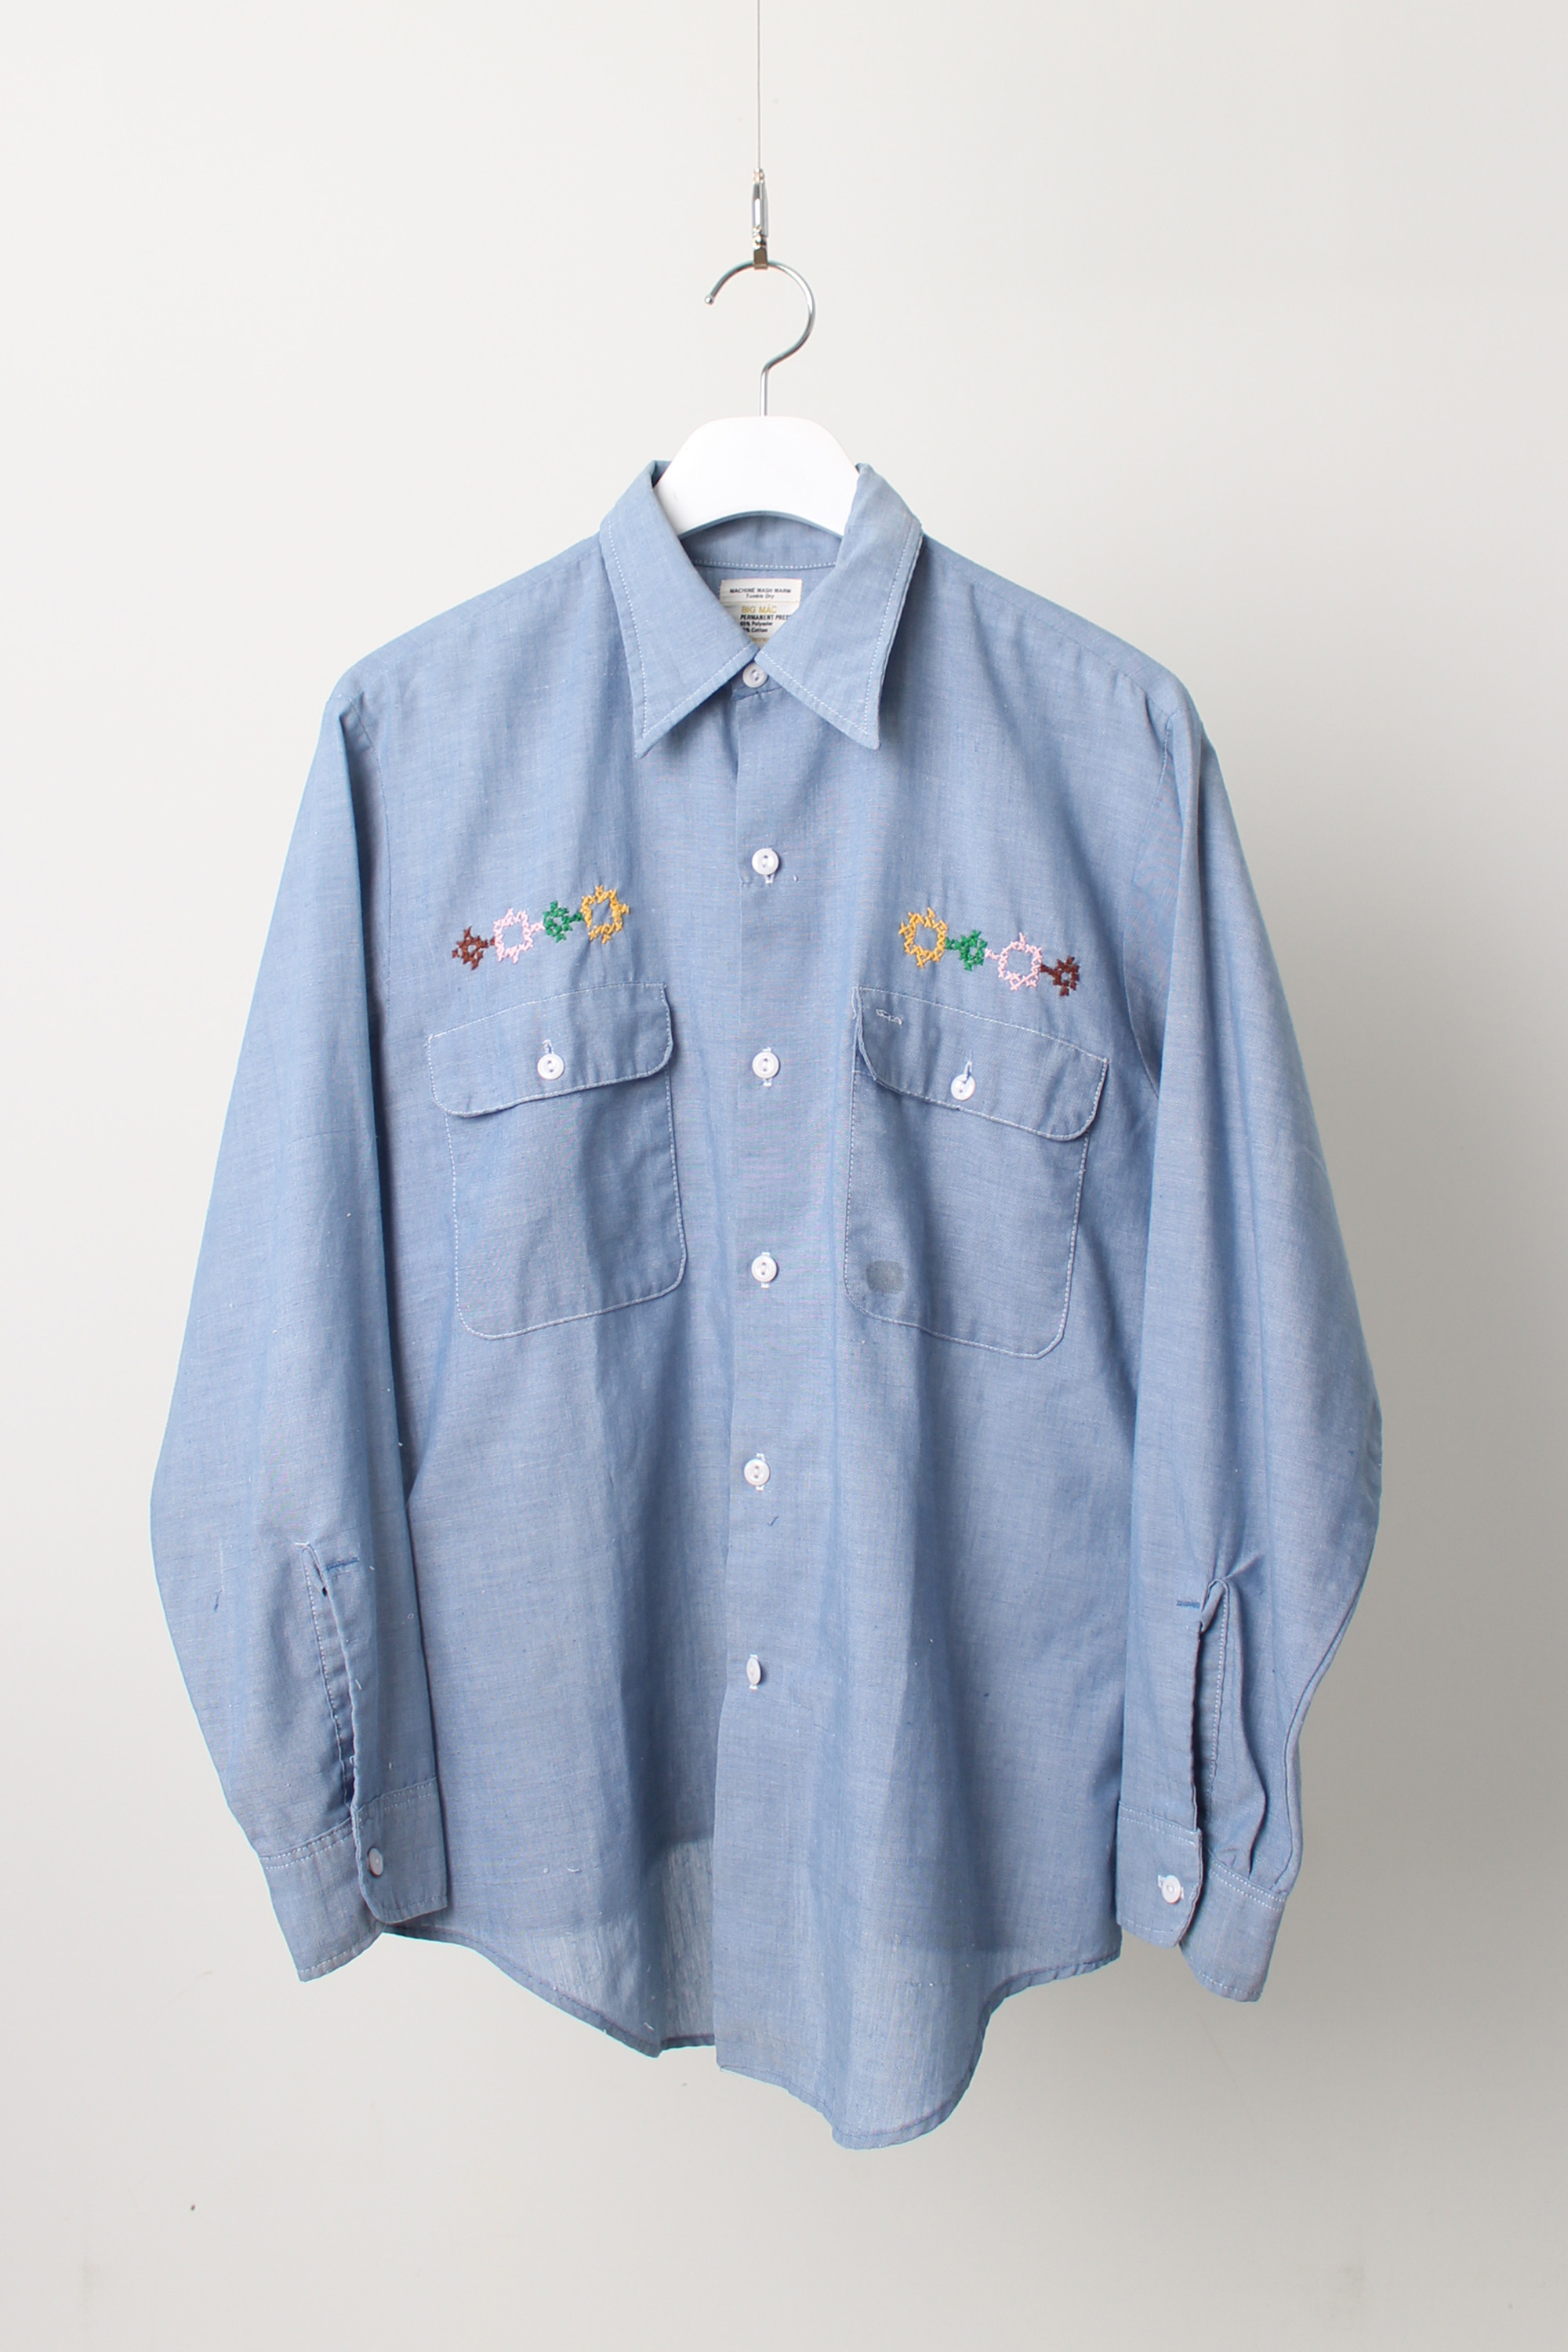 vintage JC Penney Embroidered shirt